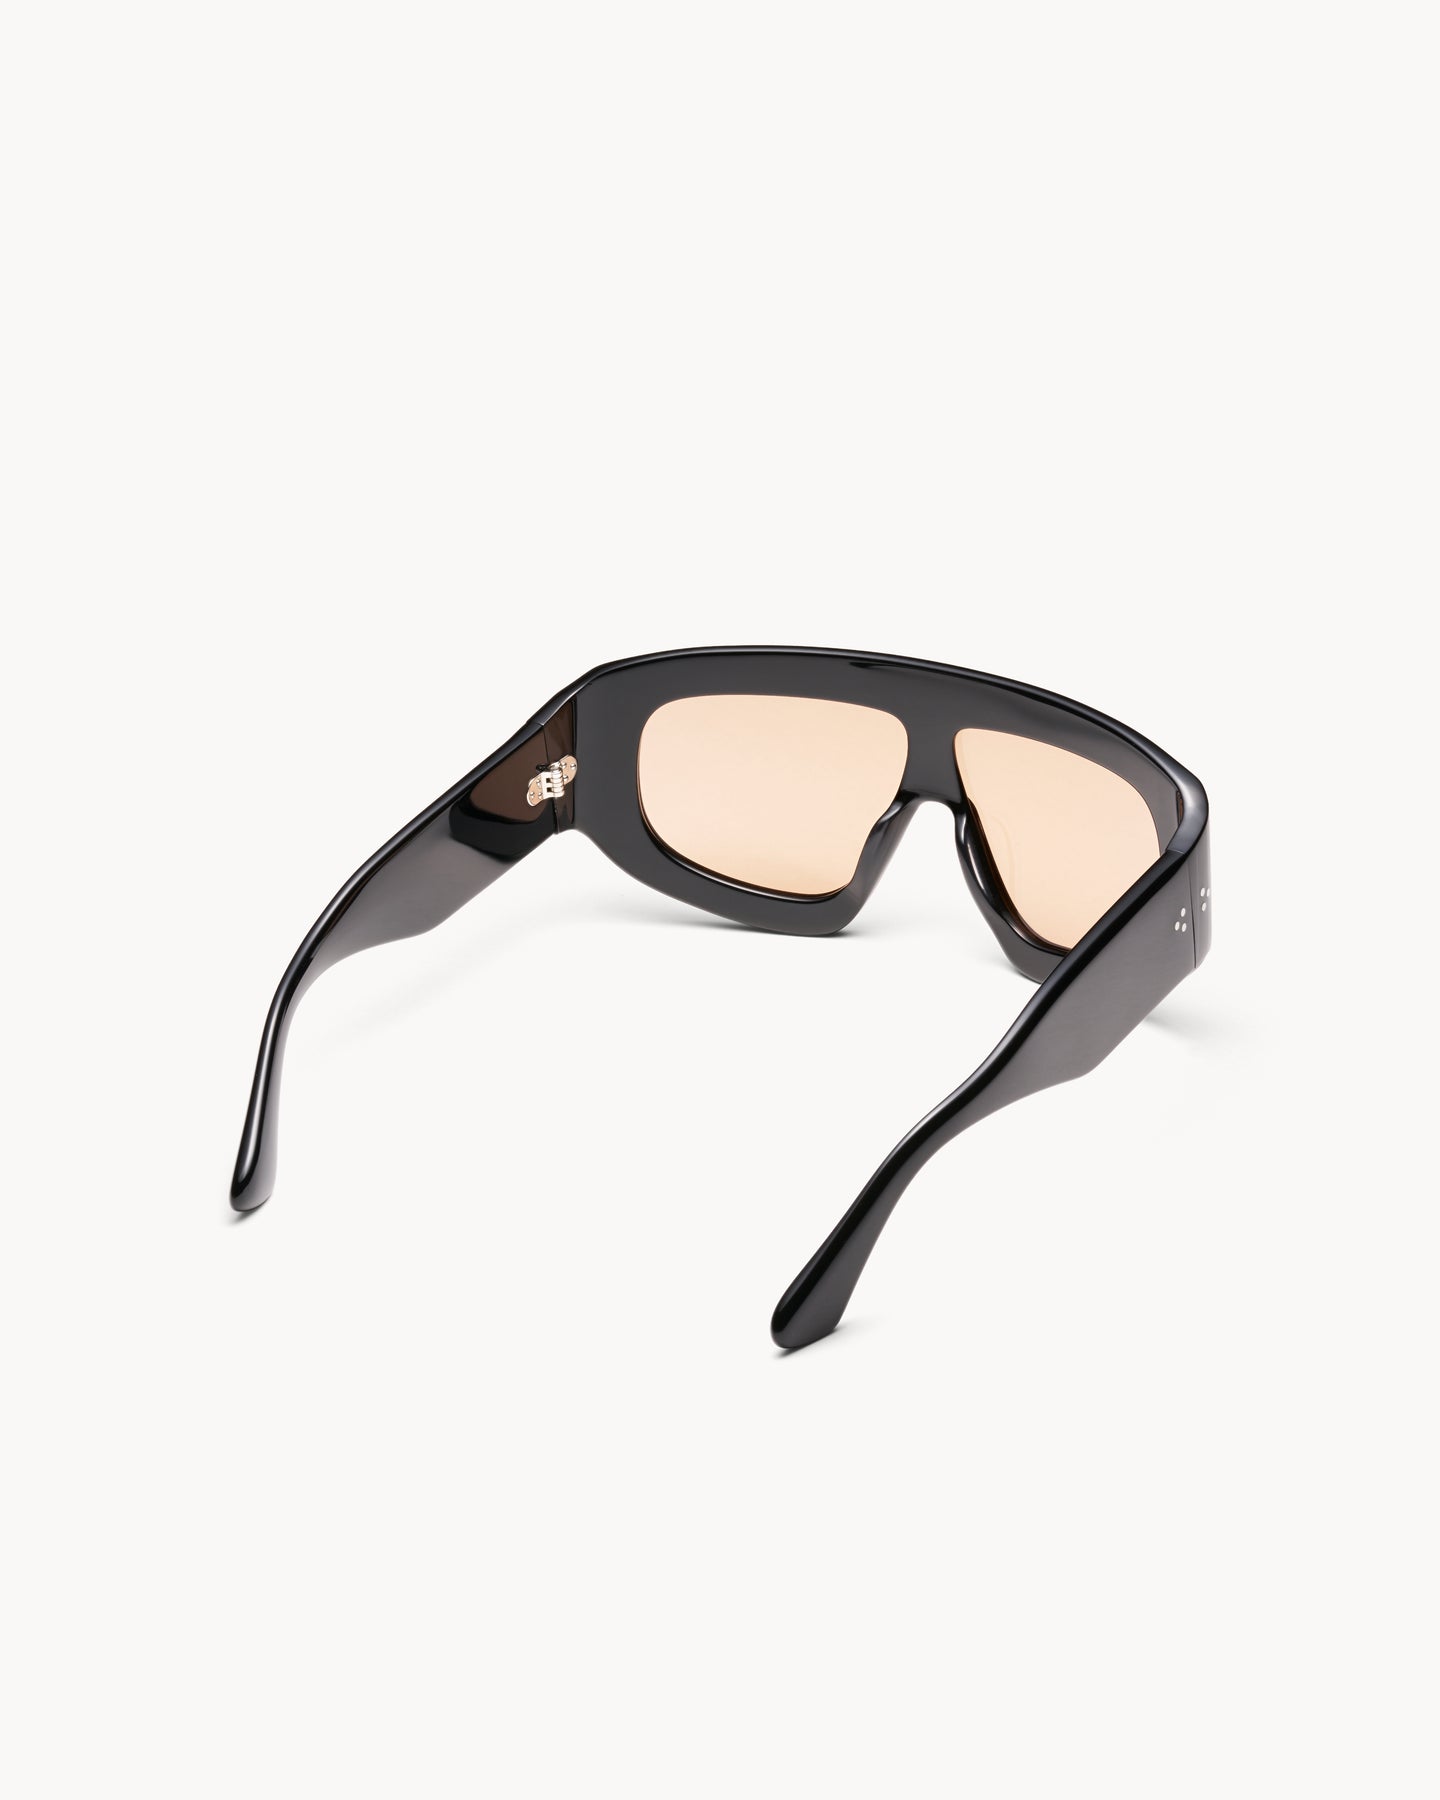 Port Tanger Saraa Sunglasses in Black Acetate and Amber Lenses 3